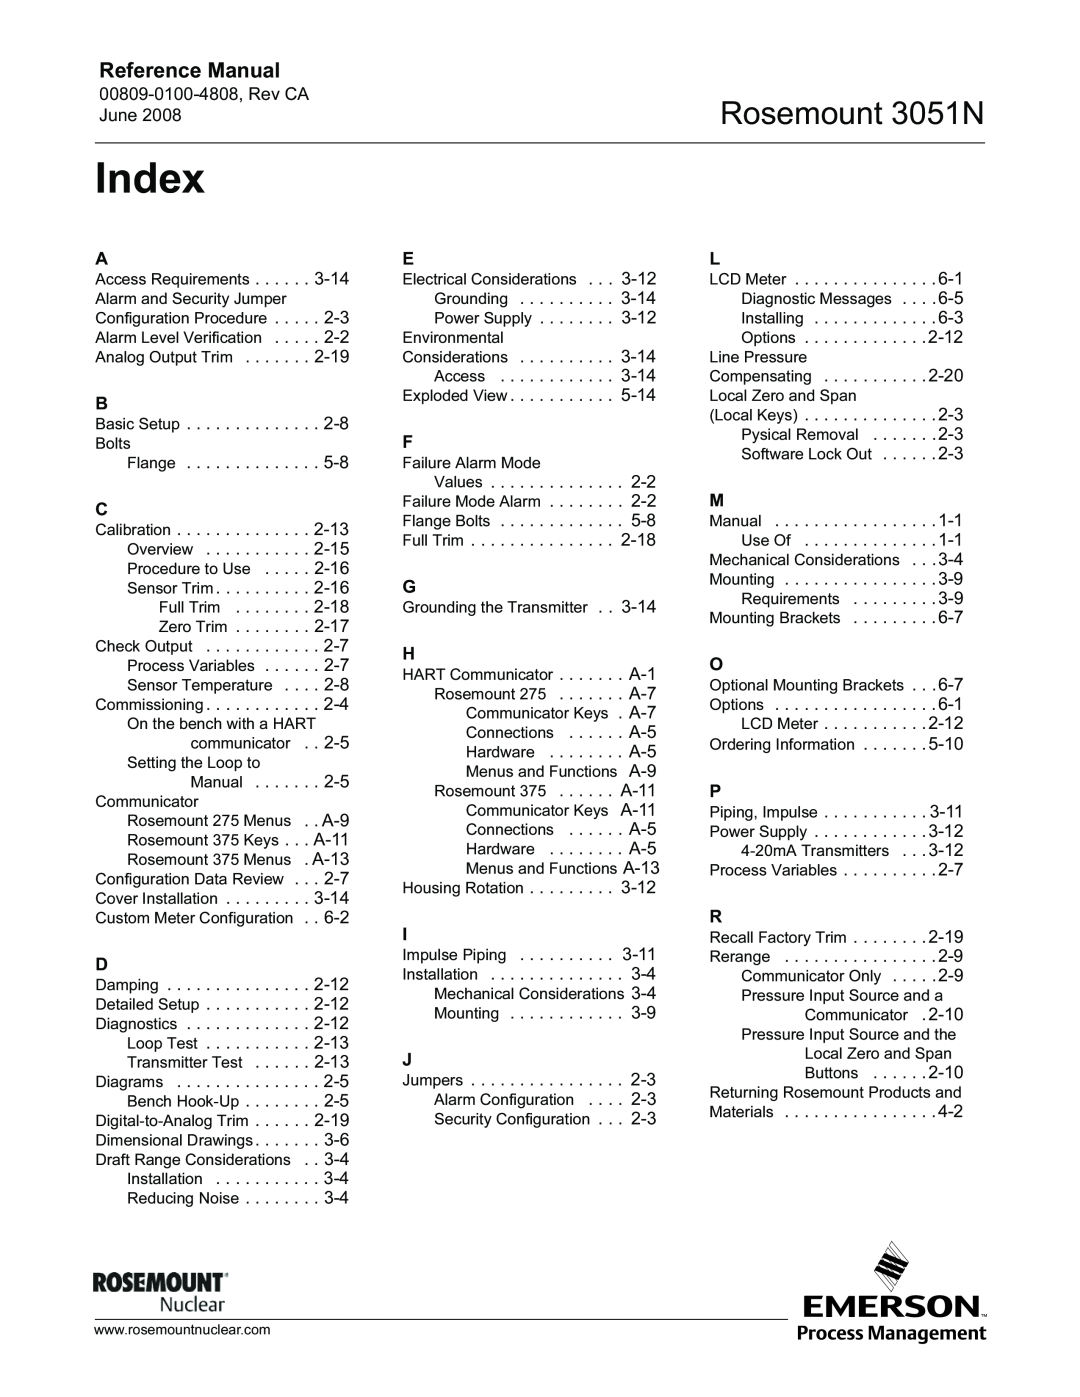 Emerson manual Index, Rosemount 3051N, Reference Manual 